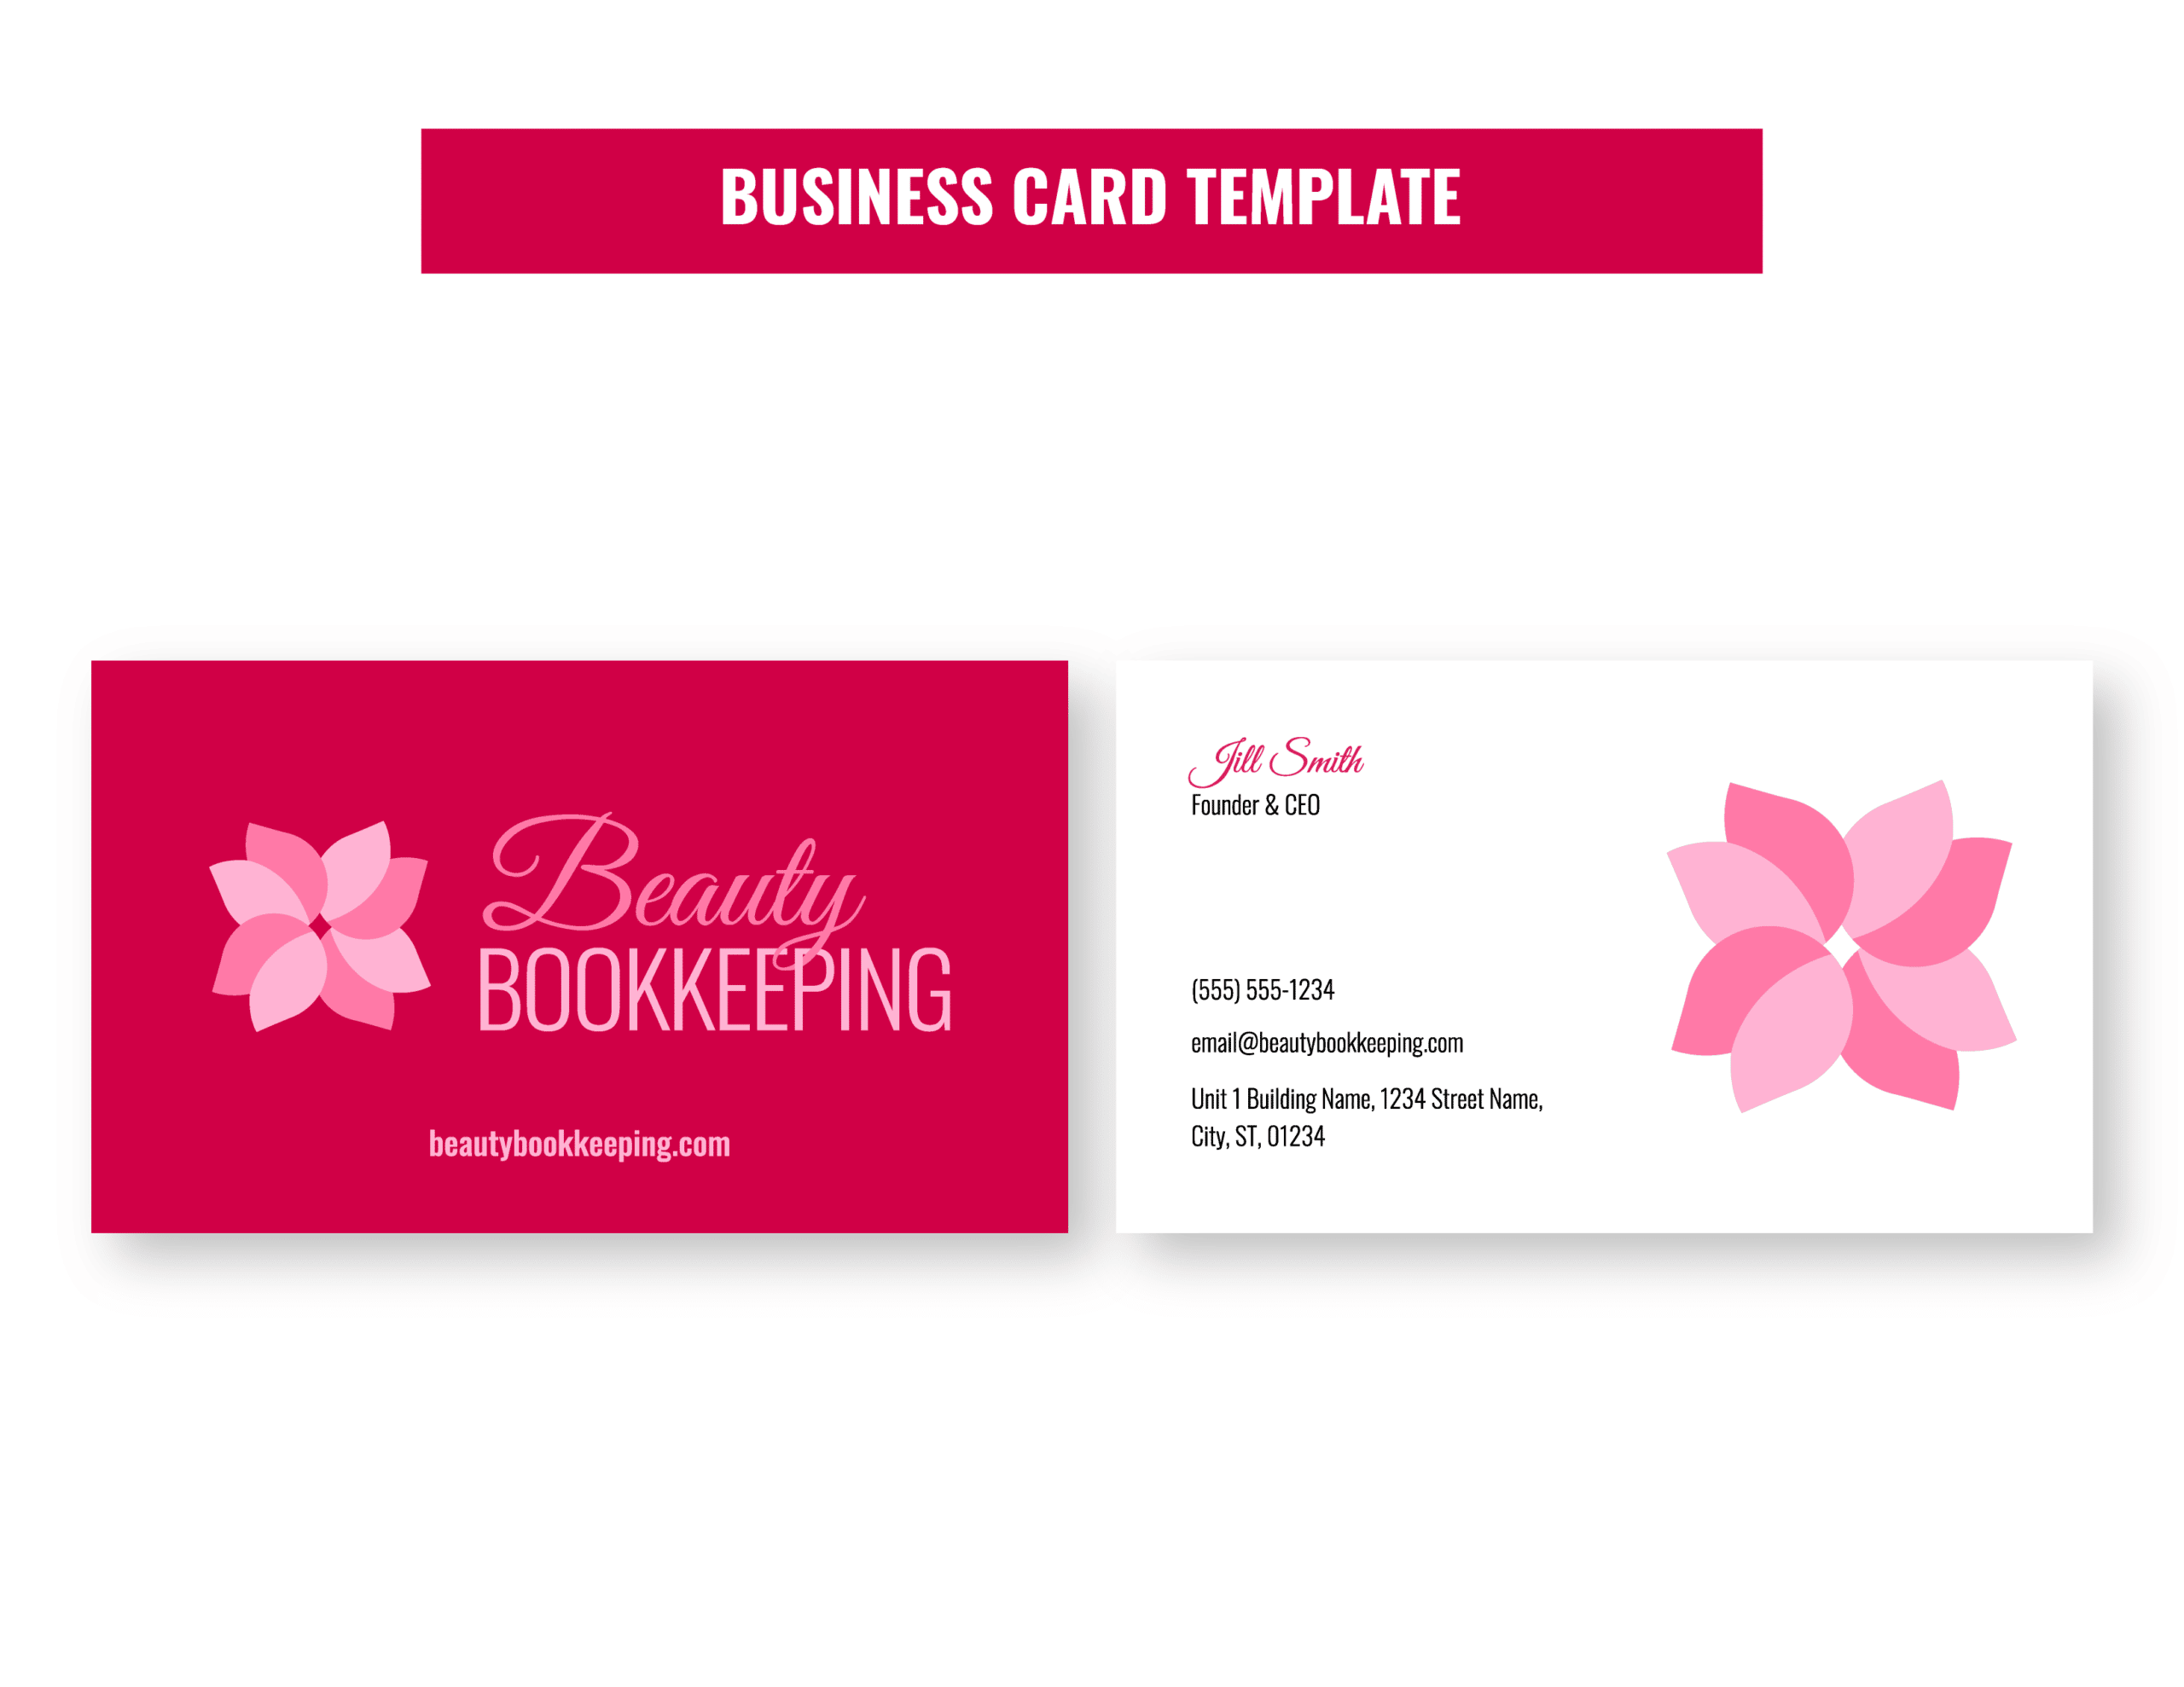 04BeautyBK_Showcase_Business Card Template